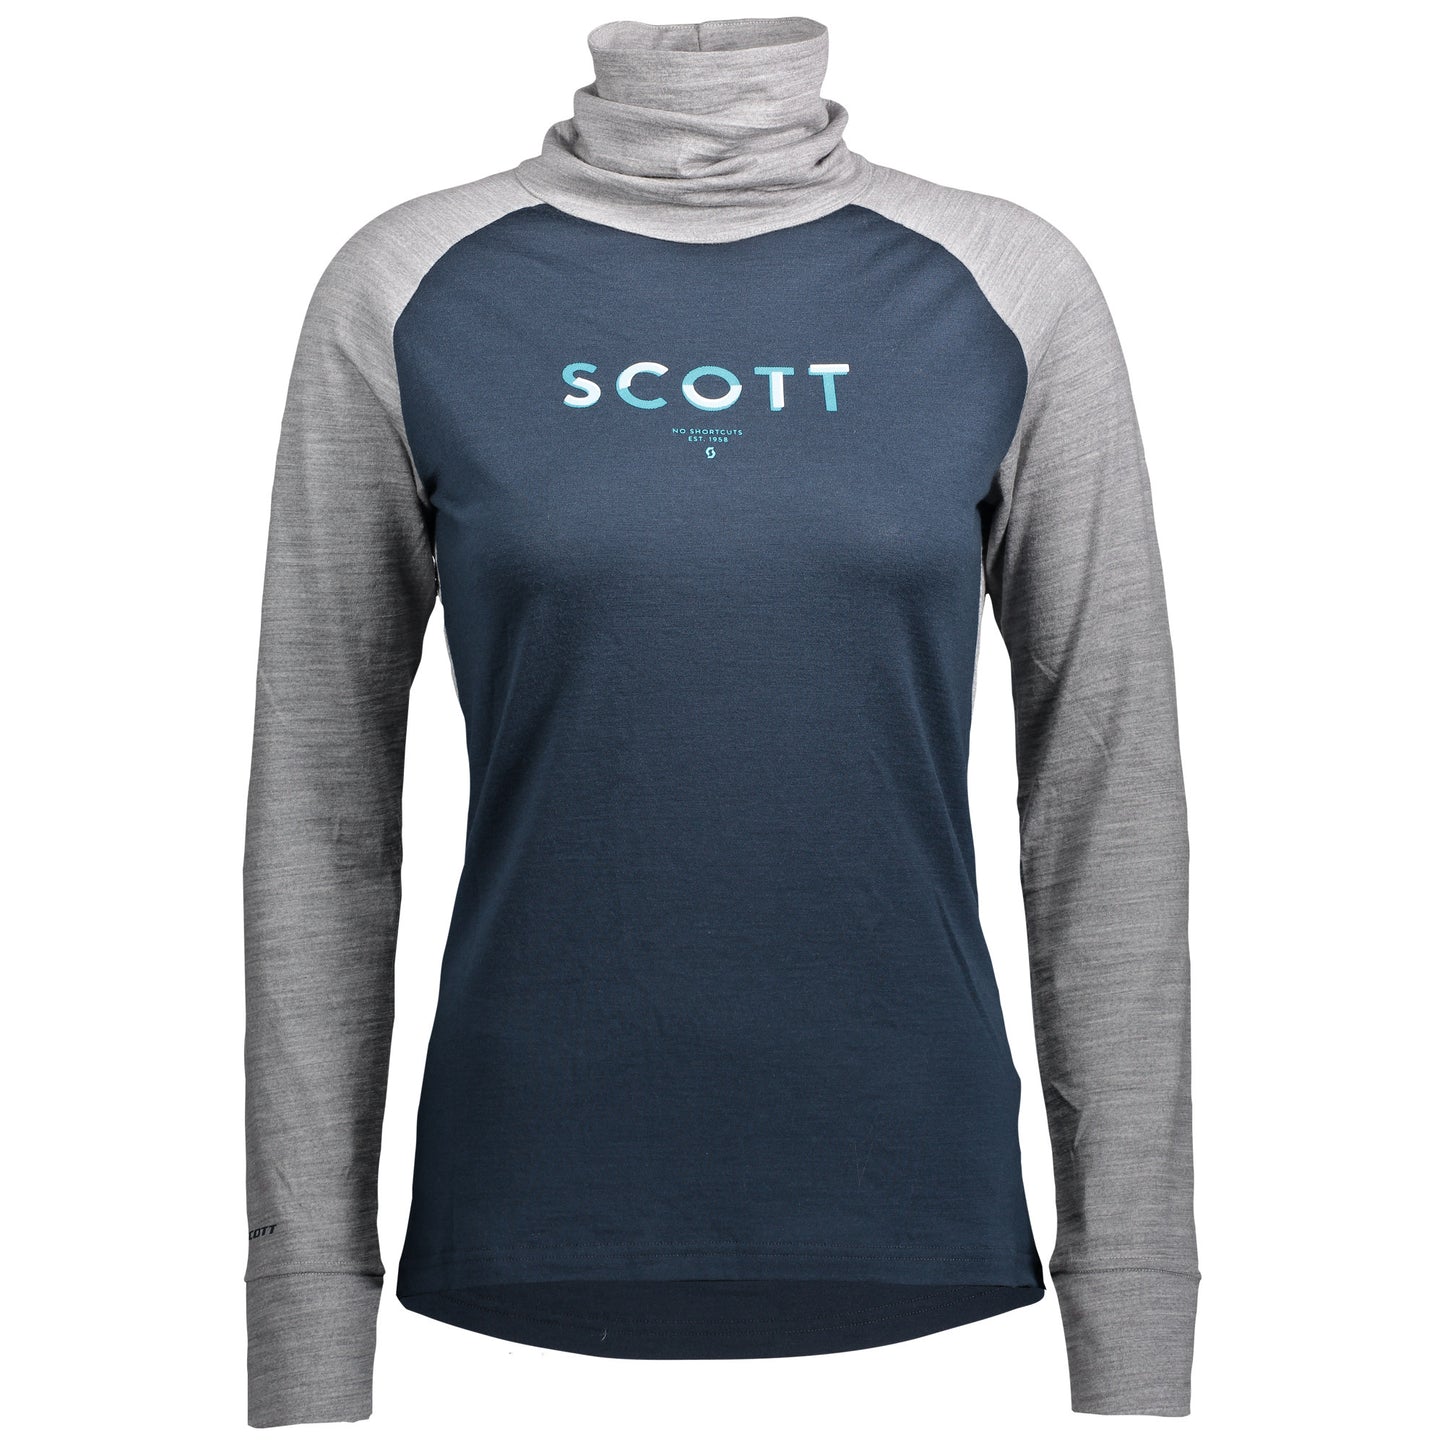 Scott Women's Defined Merino High Neck Shirt Light Grey Melange/Dark Blue Base Layer Tops